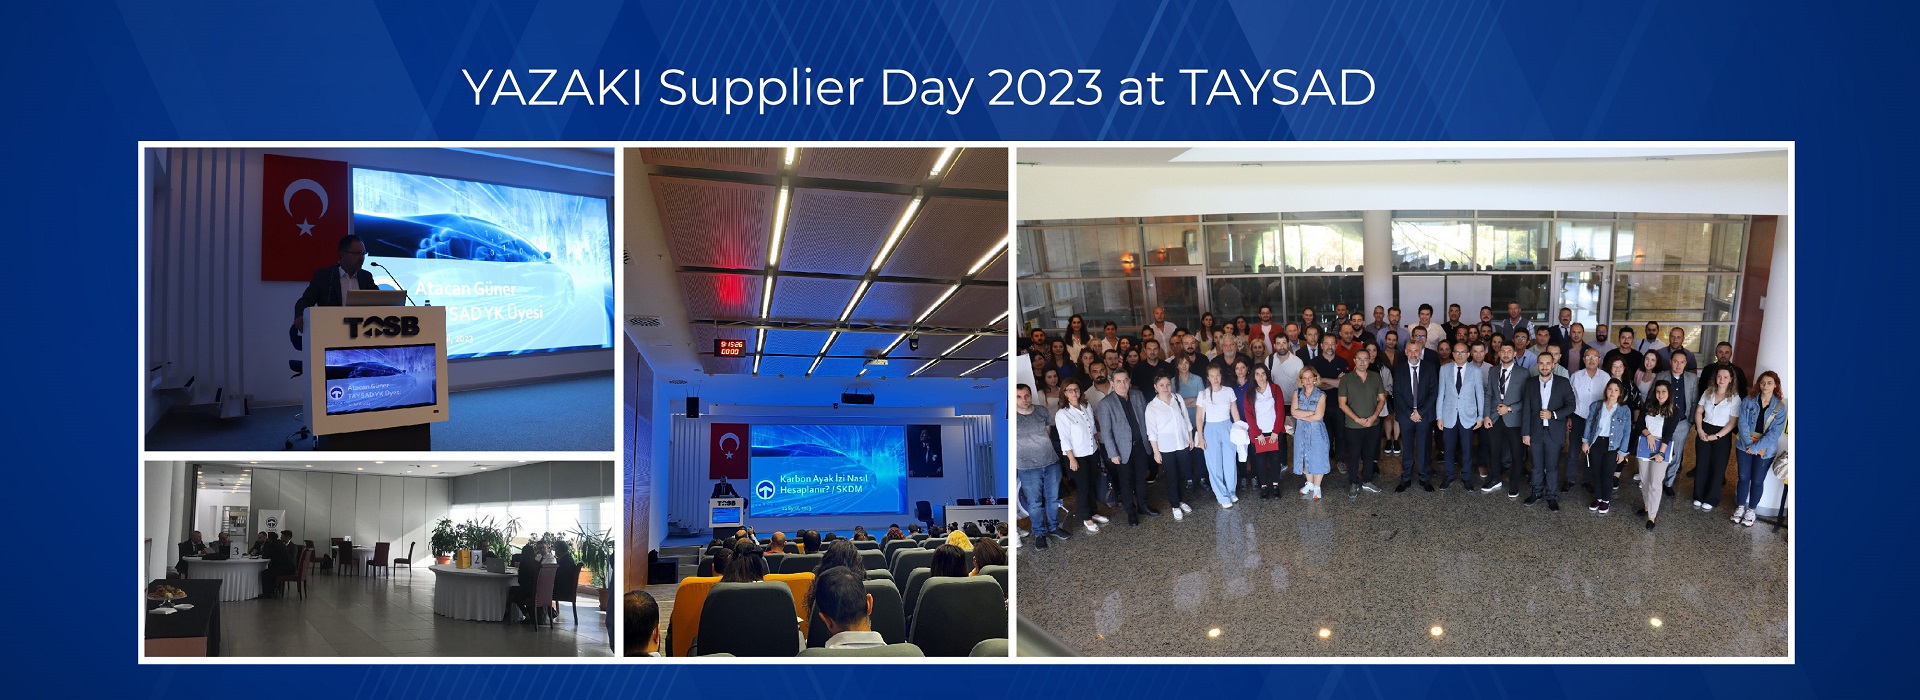 YAZAKI Supplier Day 2023 at TAYSAD